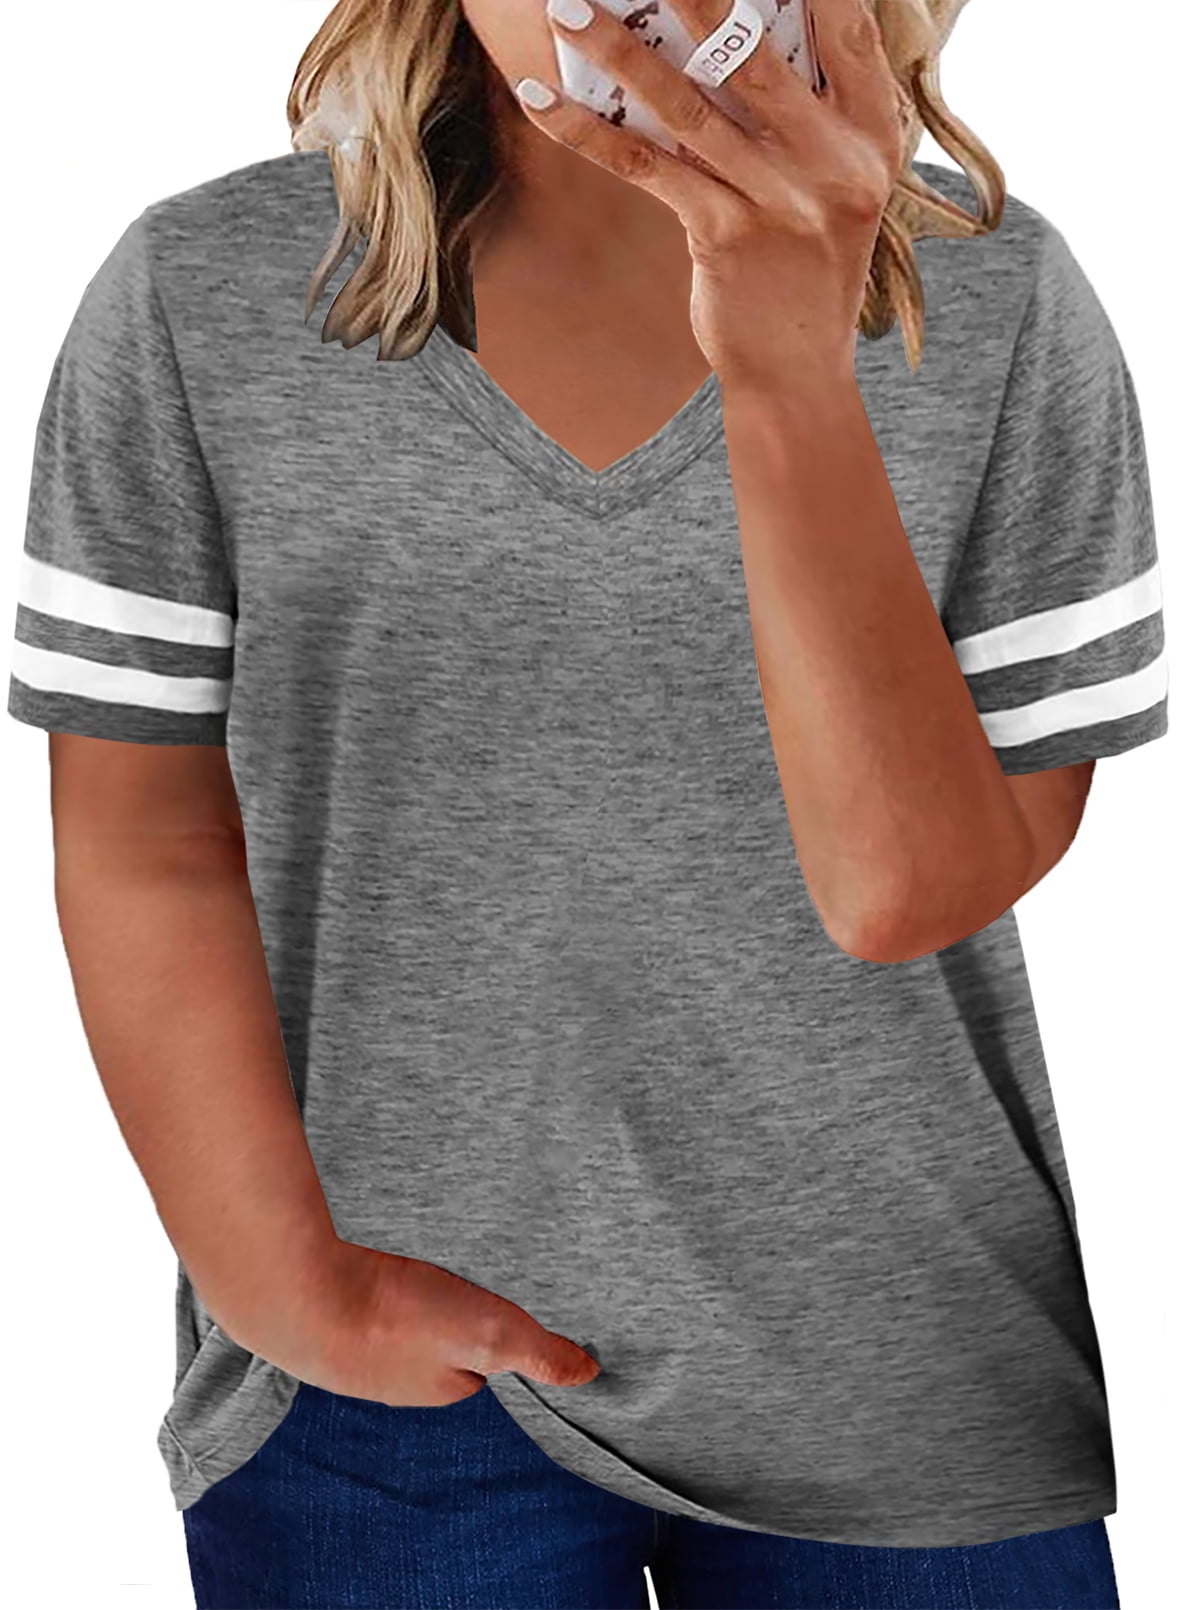 Aleumdr Womens Short Sleeve Blouse Cozy Plus Size Striped Tee Shirts Gray  Summer Tops 18 20 - Walmart.com